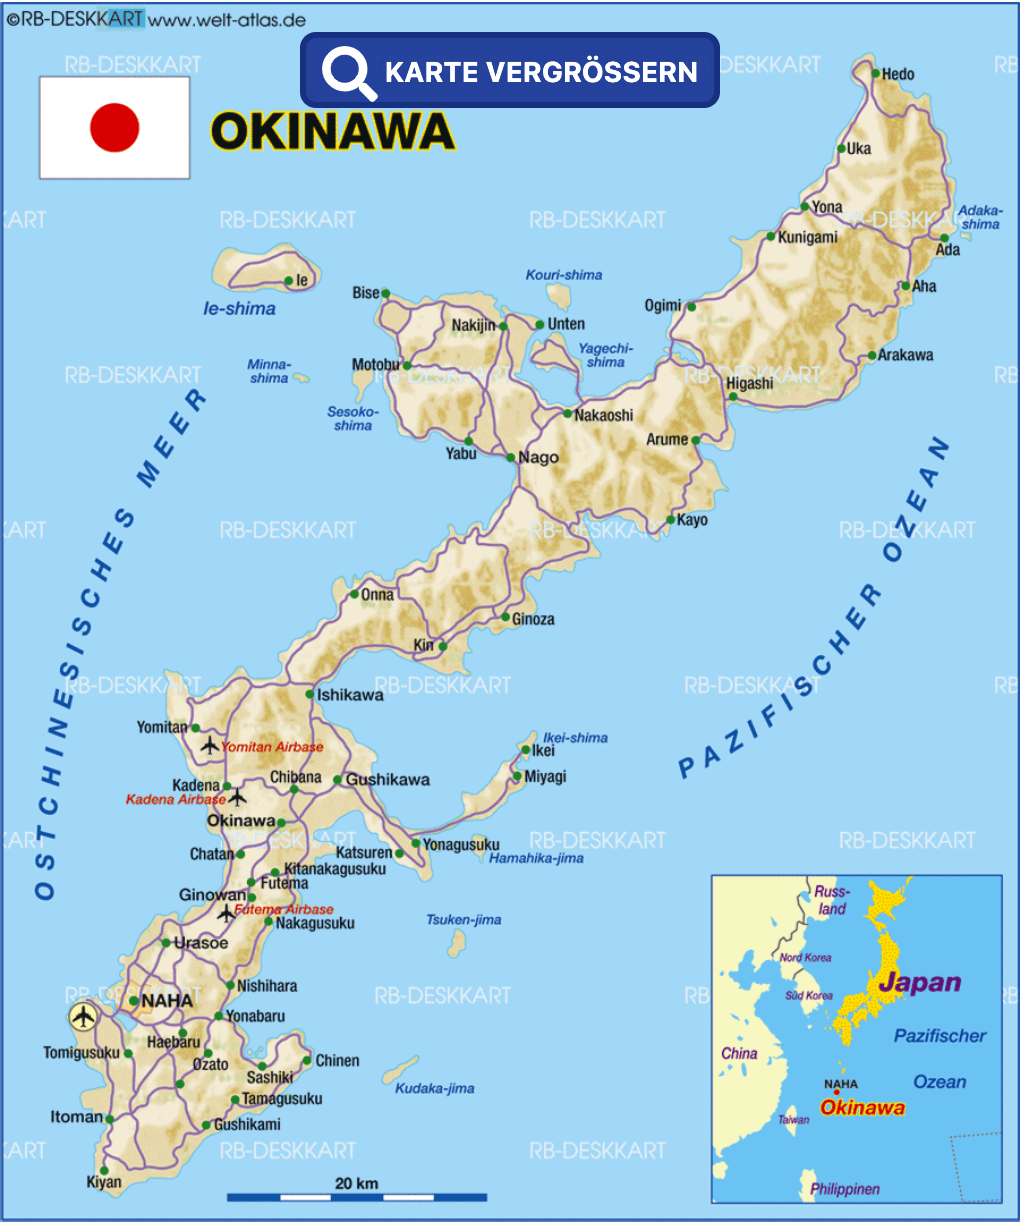 https://www.welt-atlas.de/karte_von_okinawa_6-865